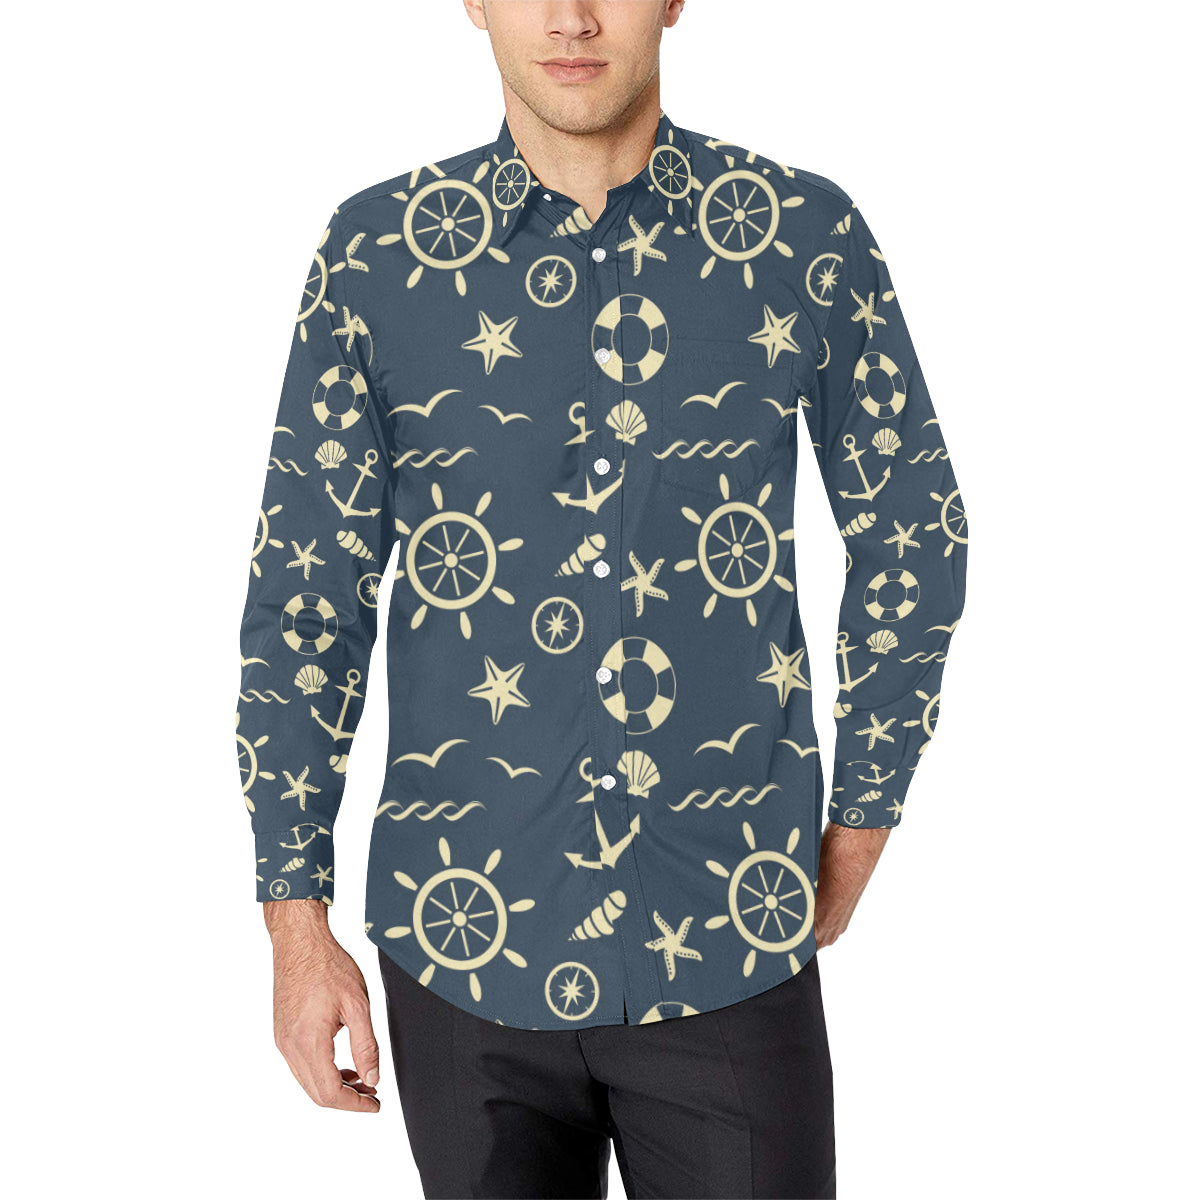 Nautical Pattern Print Design A01 Men's Long Sleeve Shirt